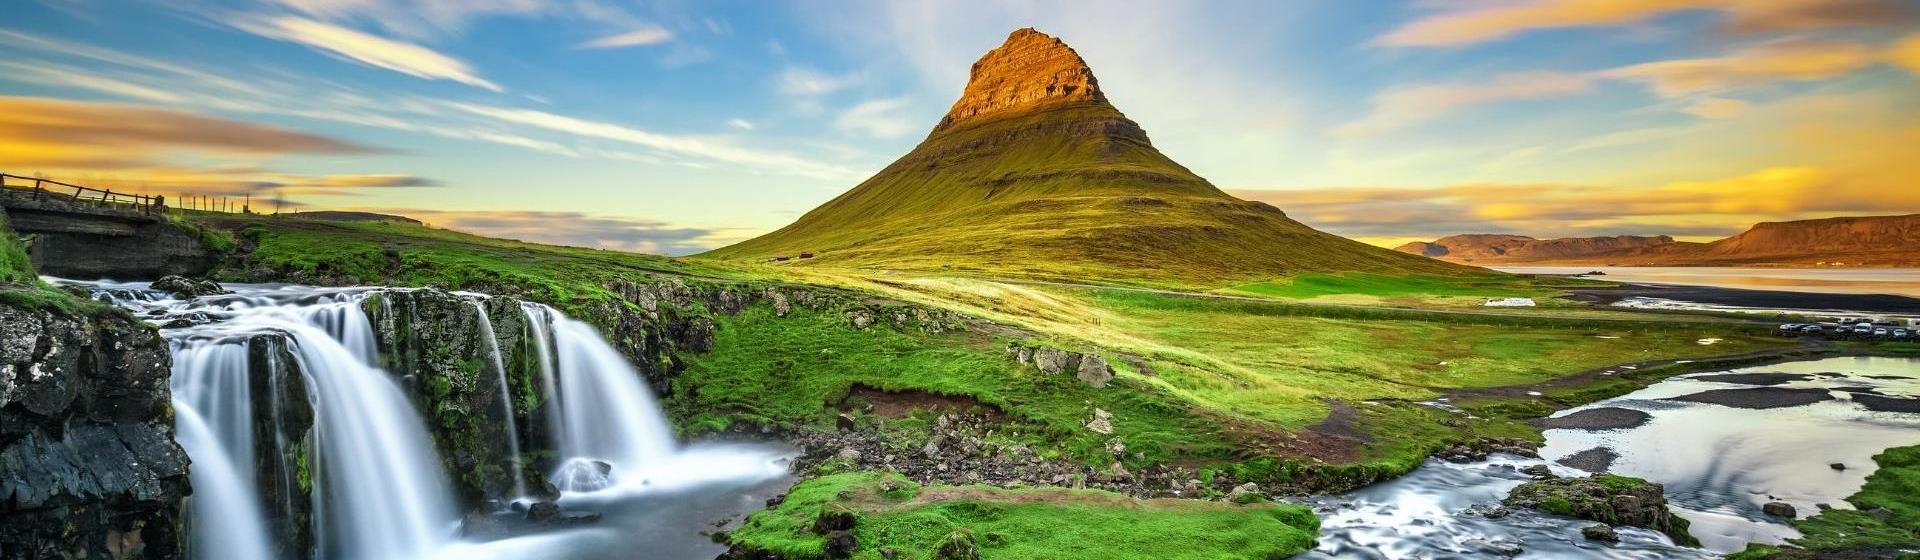 Holidays to Iceland